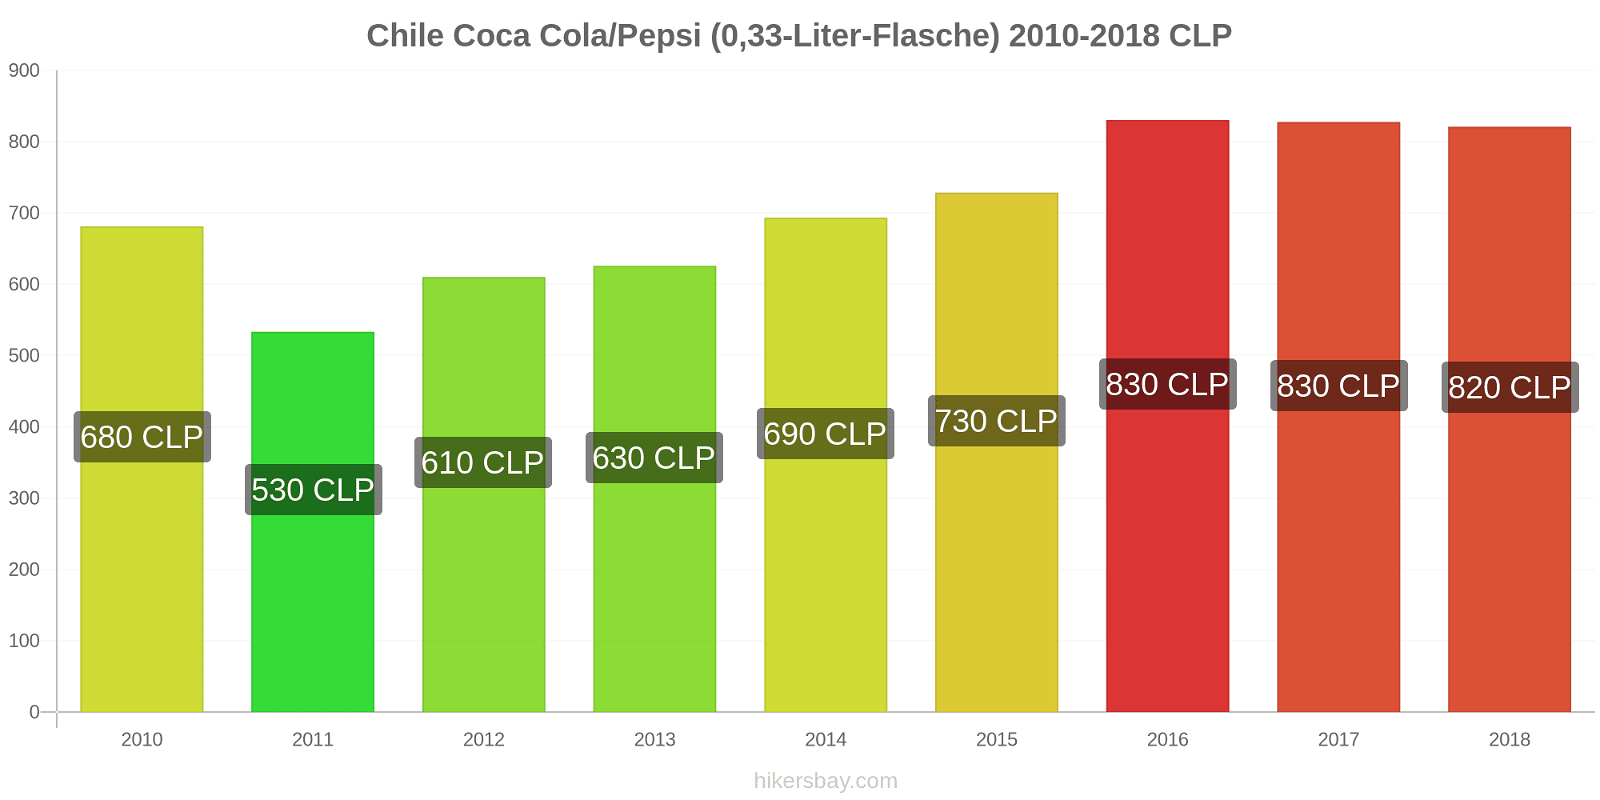 Chile Preisänderungen Coke/Pepsi (0.33-Liter-Flasche) hikersbay.com